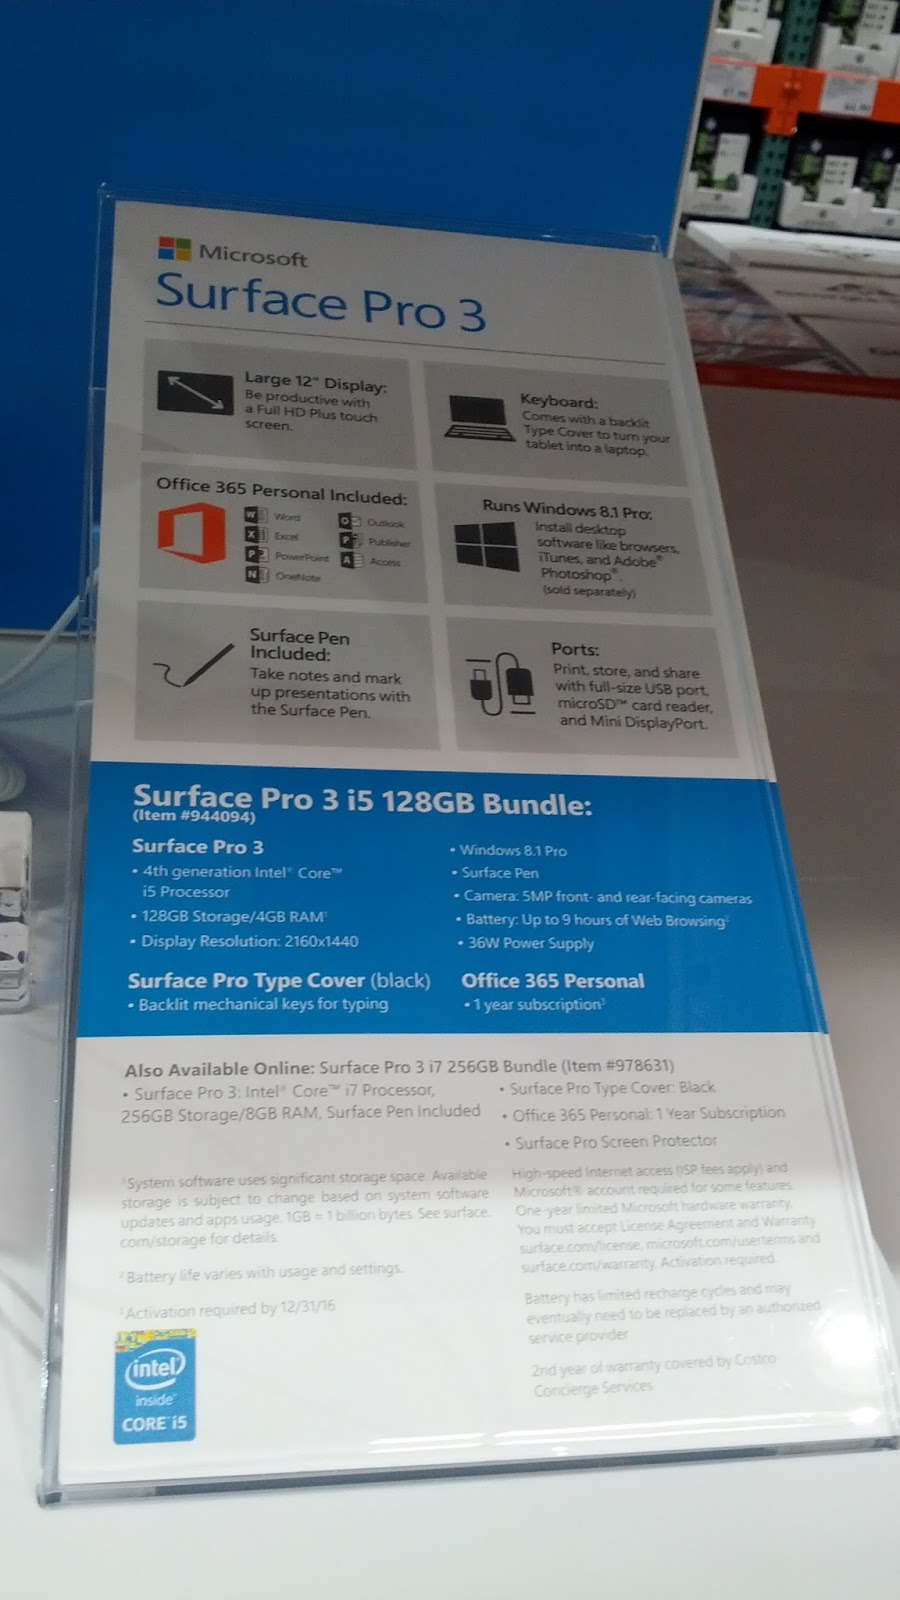 Microsoft Surface Pro 3 i5 128gb Bundle | Costco Weekender